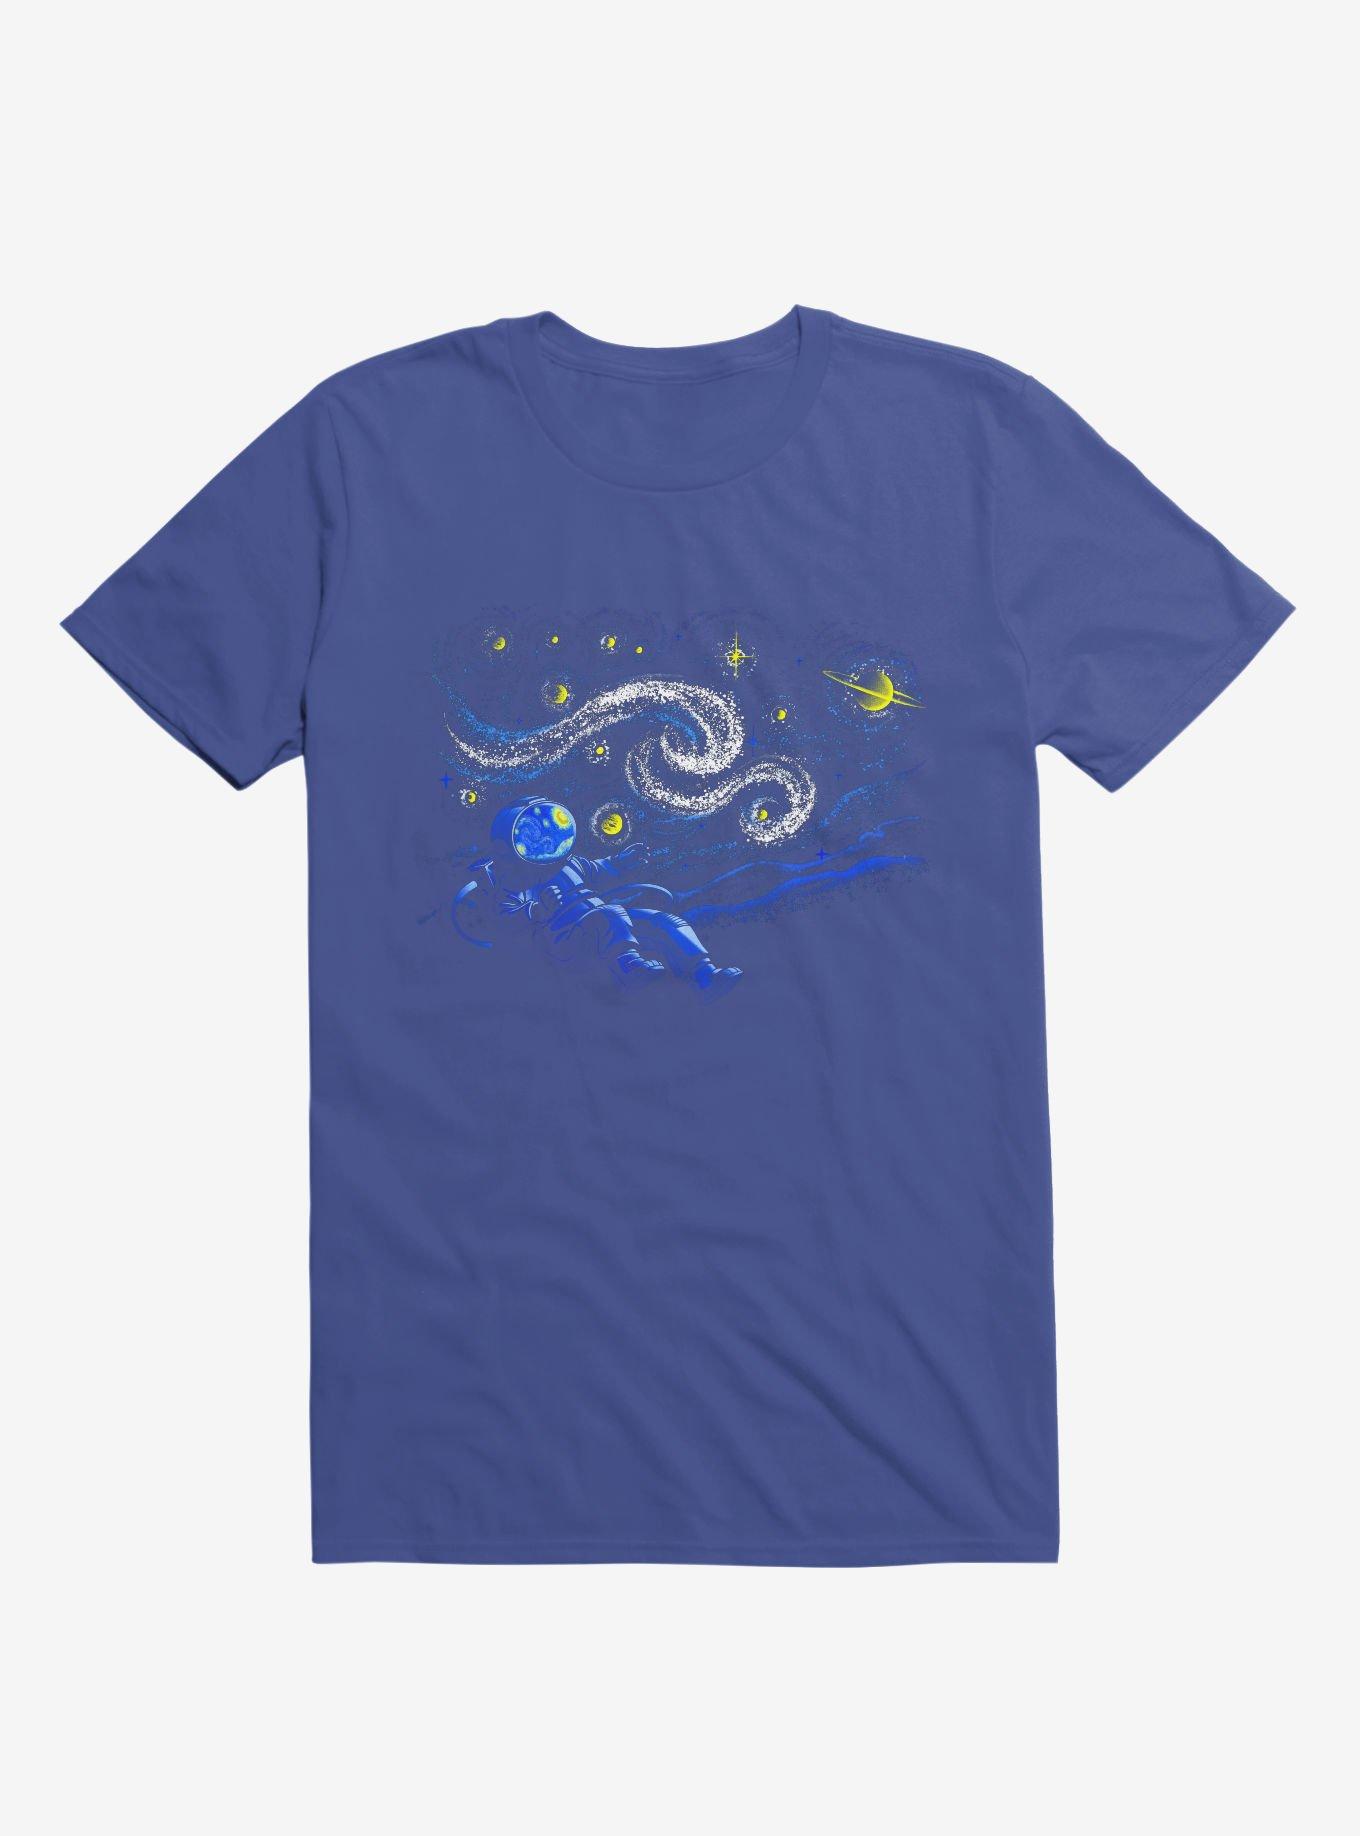 Starry Night Gravity Royal Blue T-Shirt